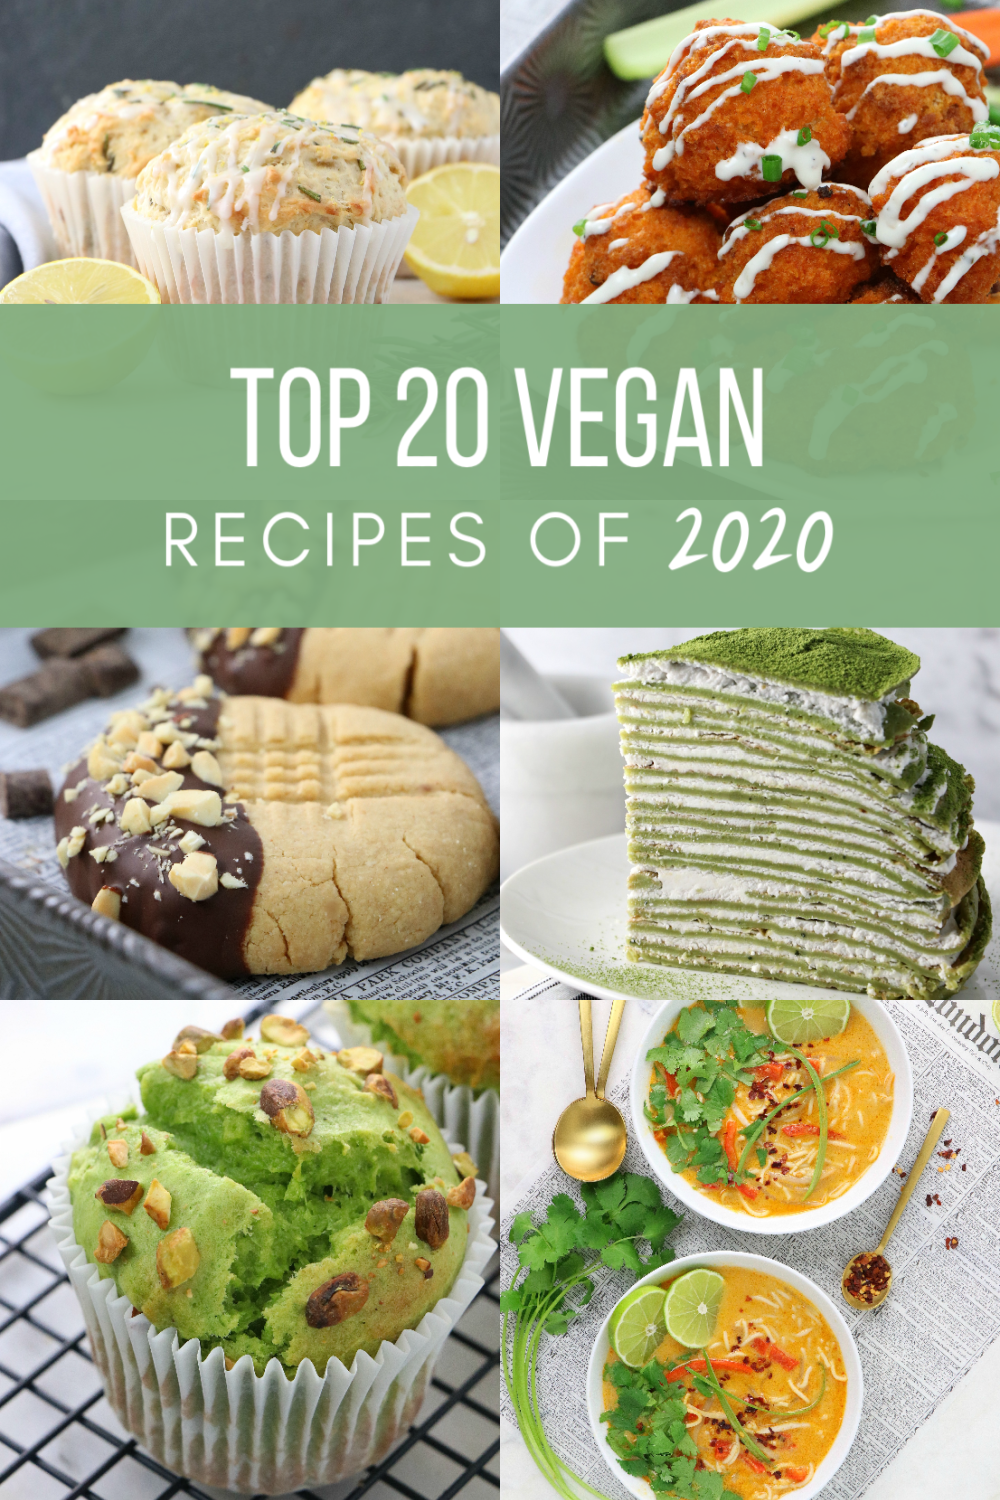 Top 20 Vegan Recipes of 2020